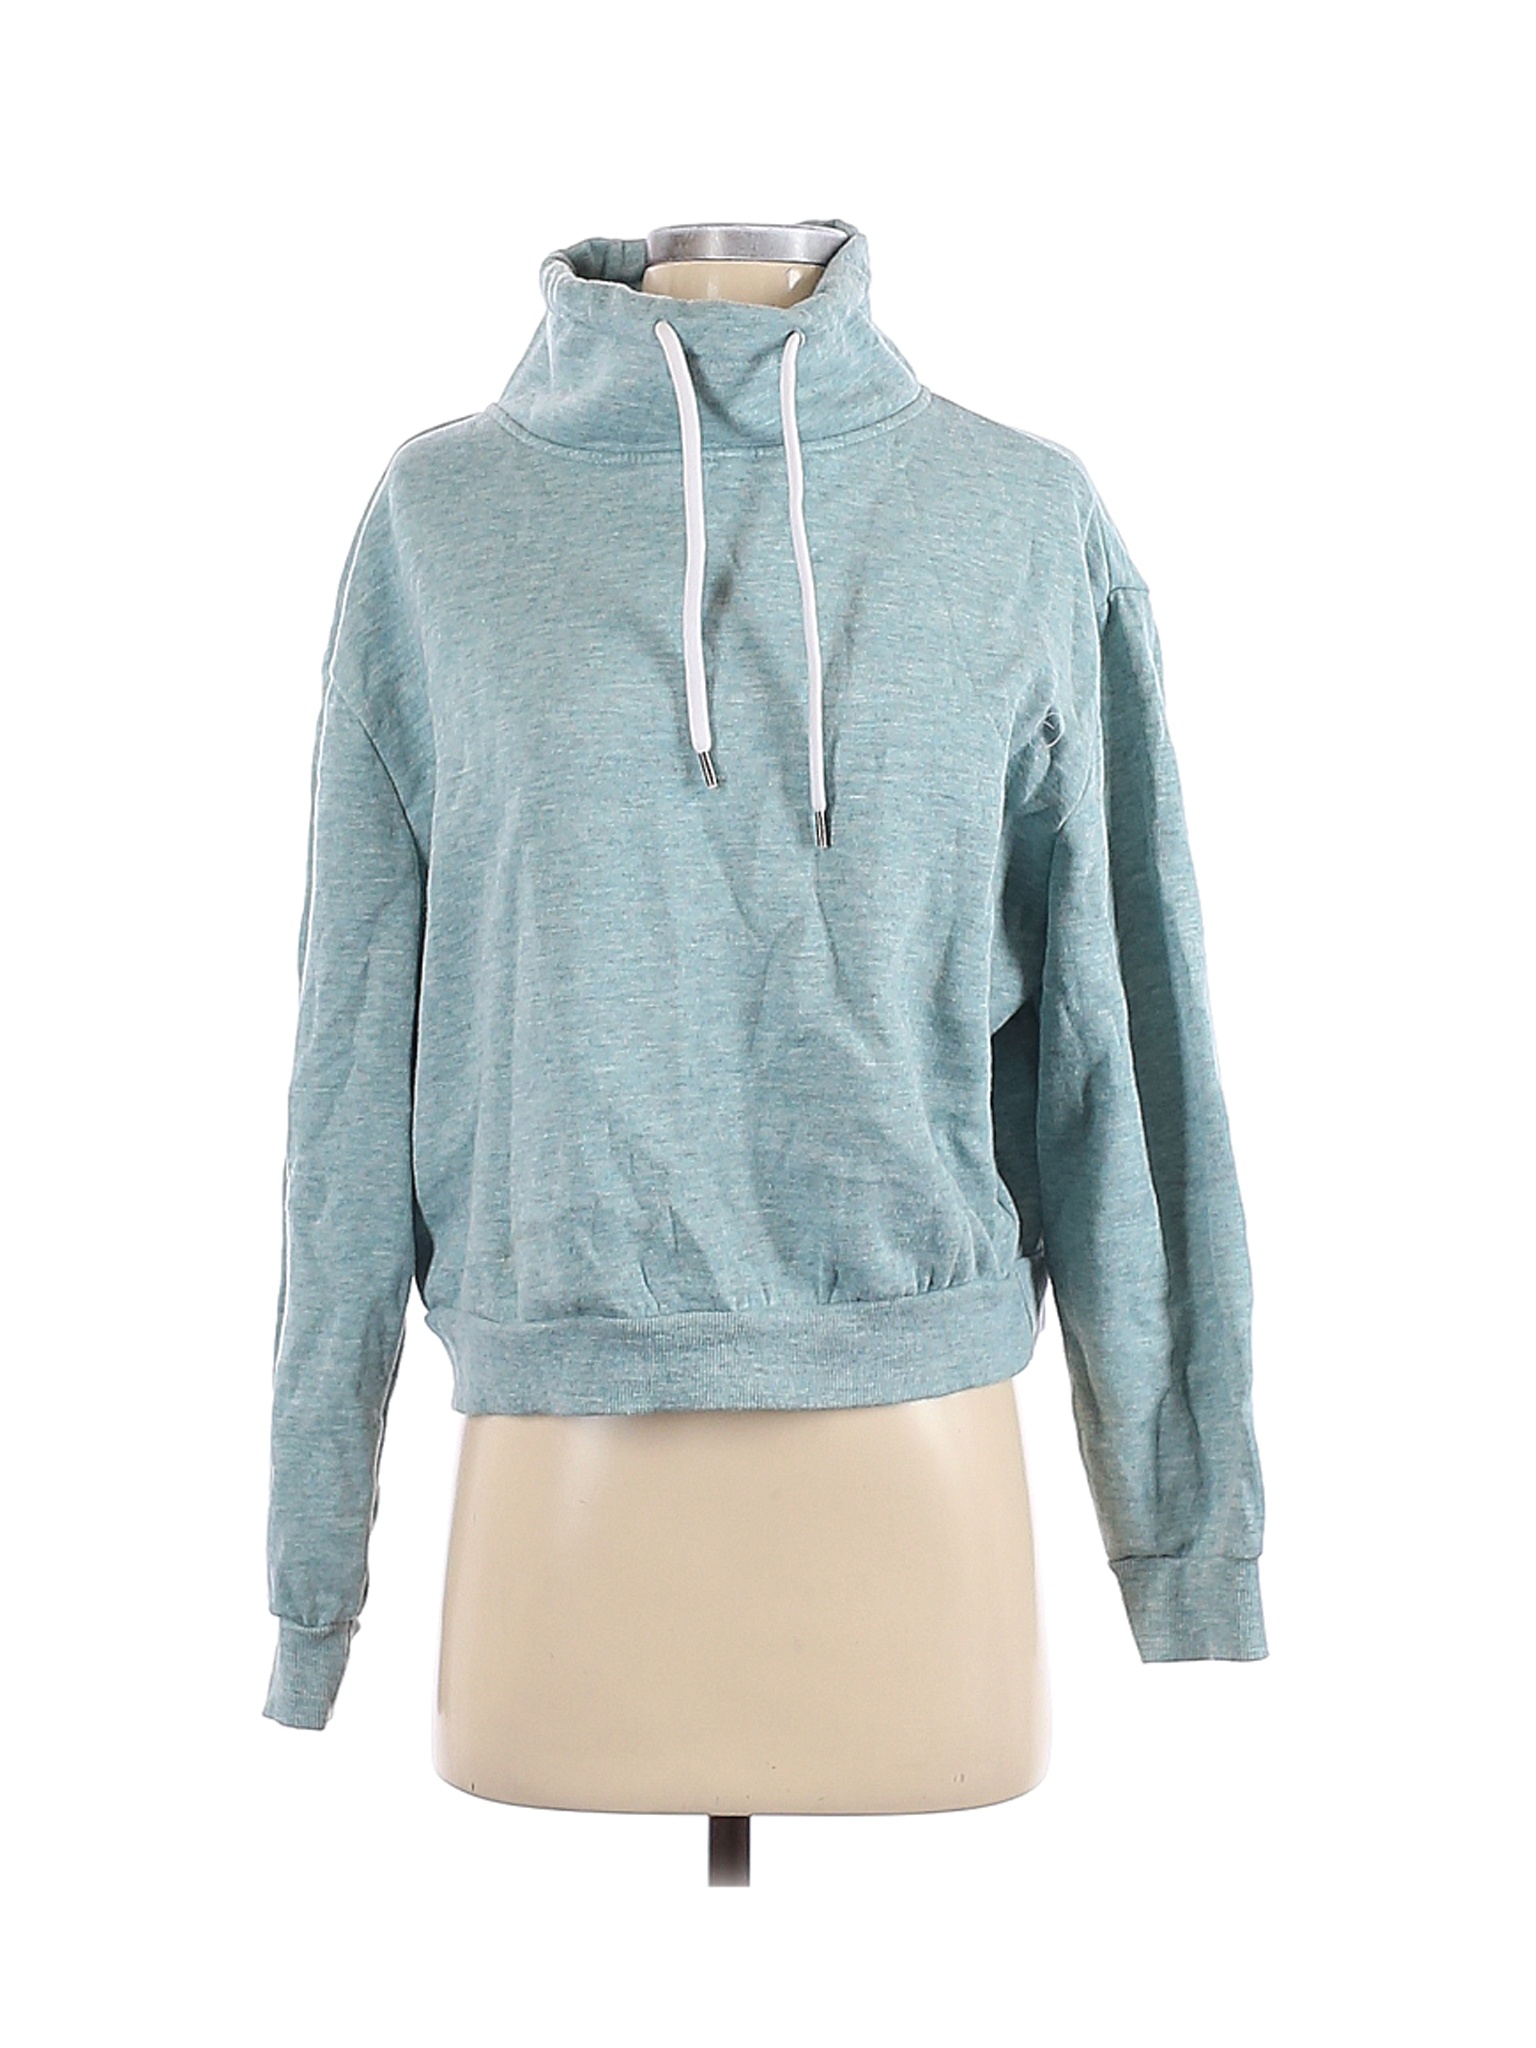 Reflex Women Blue Sweatshirt S | eBay